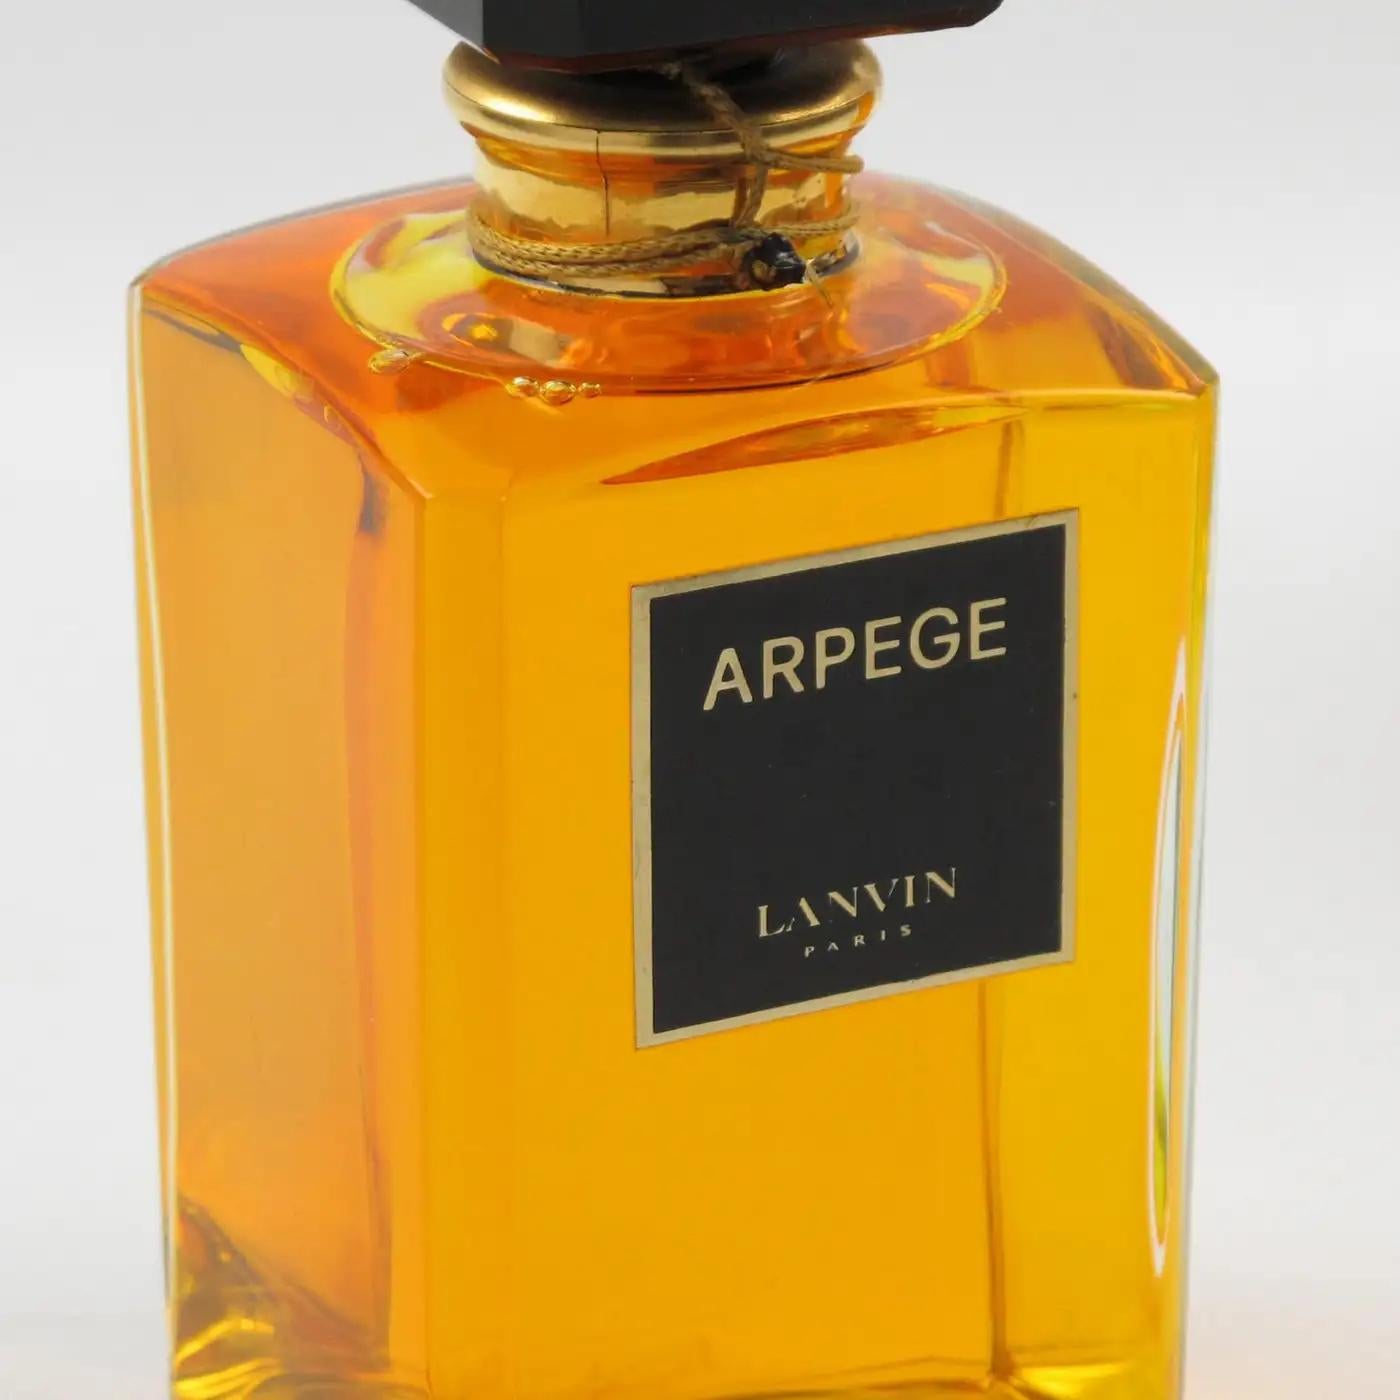 Français Flacon de parfum factice en cristal Lanvin Arpege Store Display, 4 pièces en vente